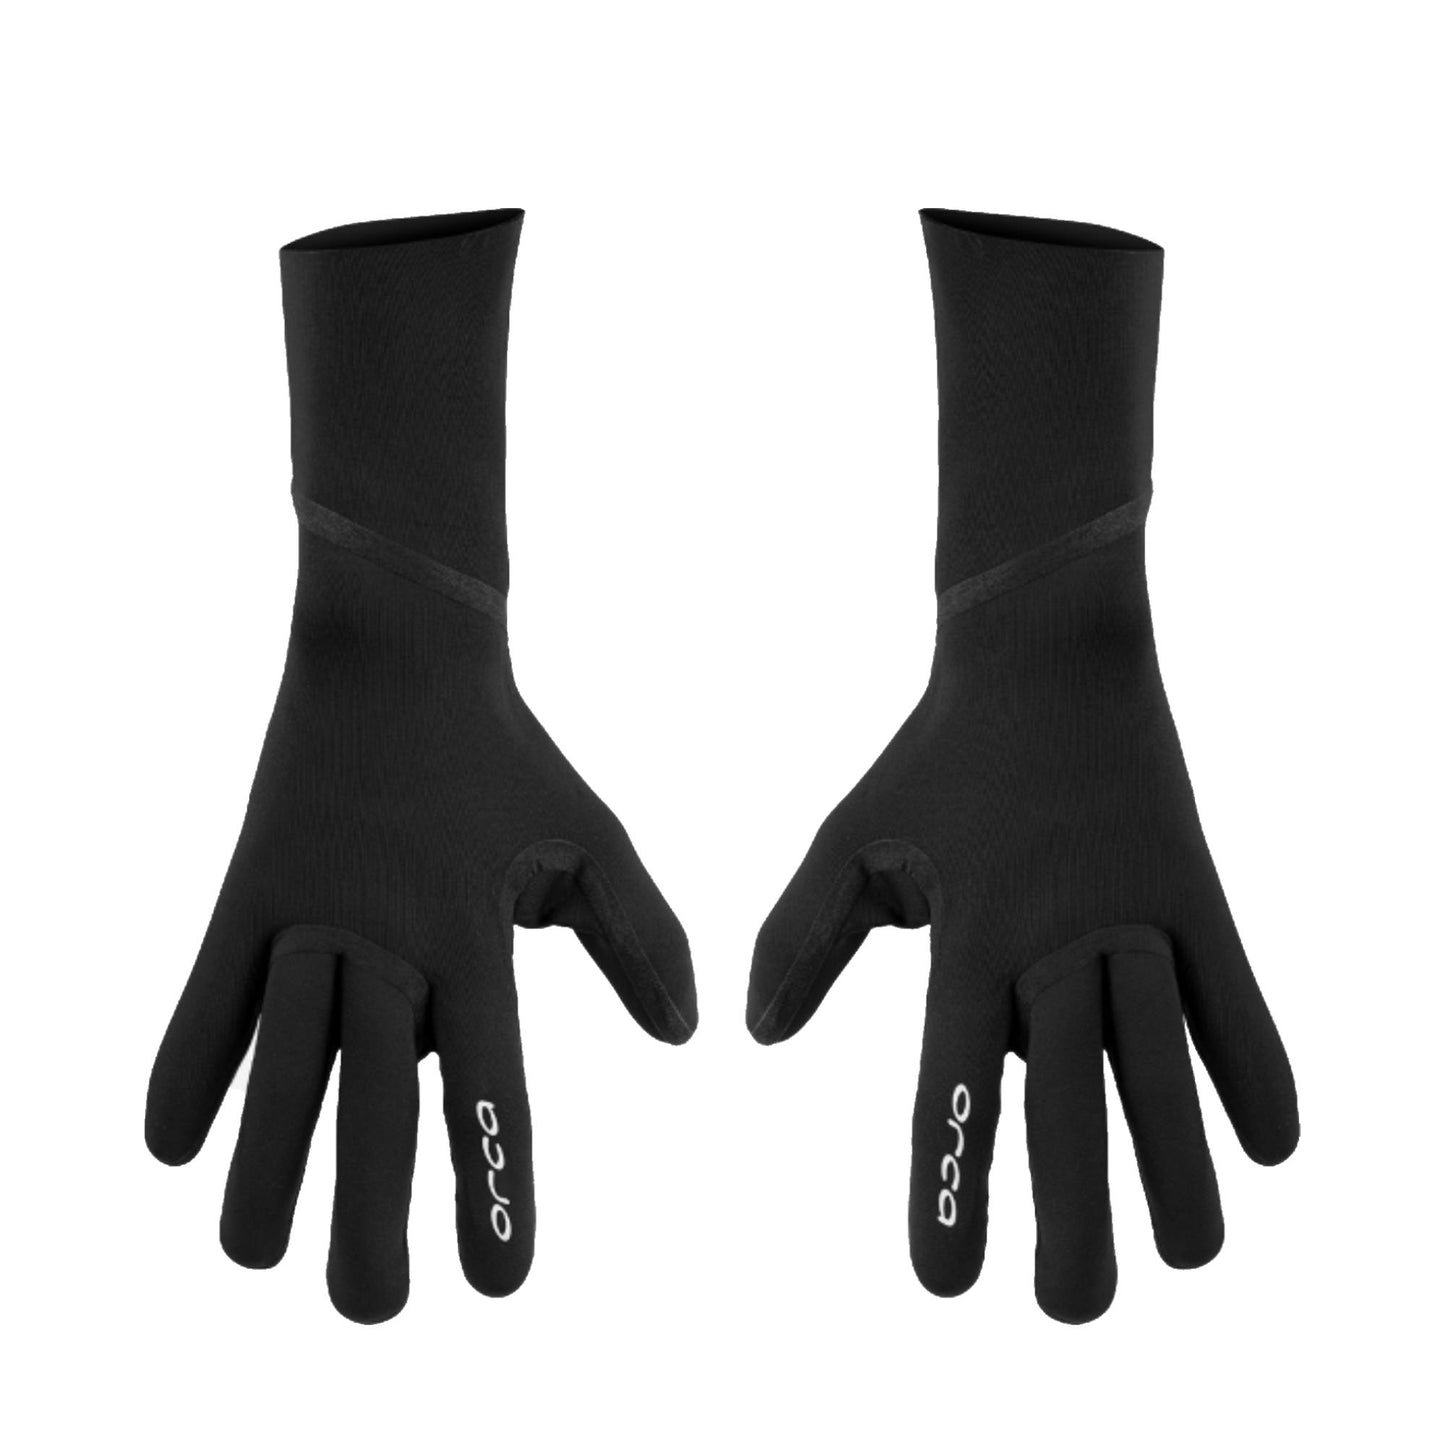 Orca Core Swimming Men's Gloves